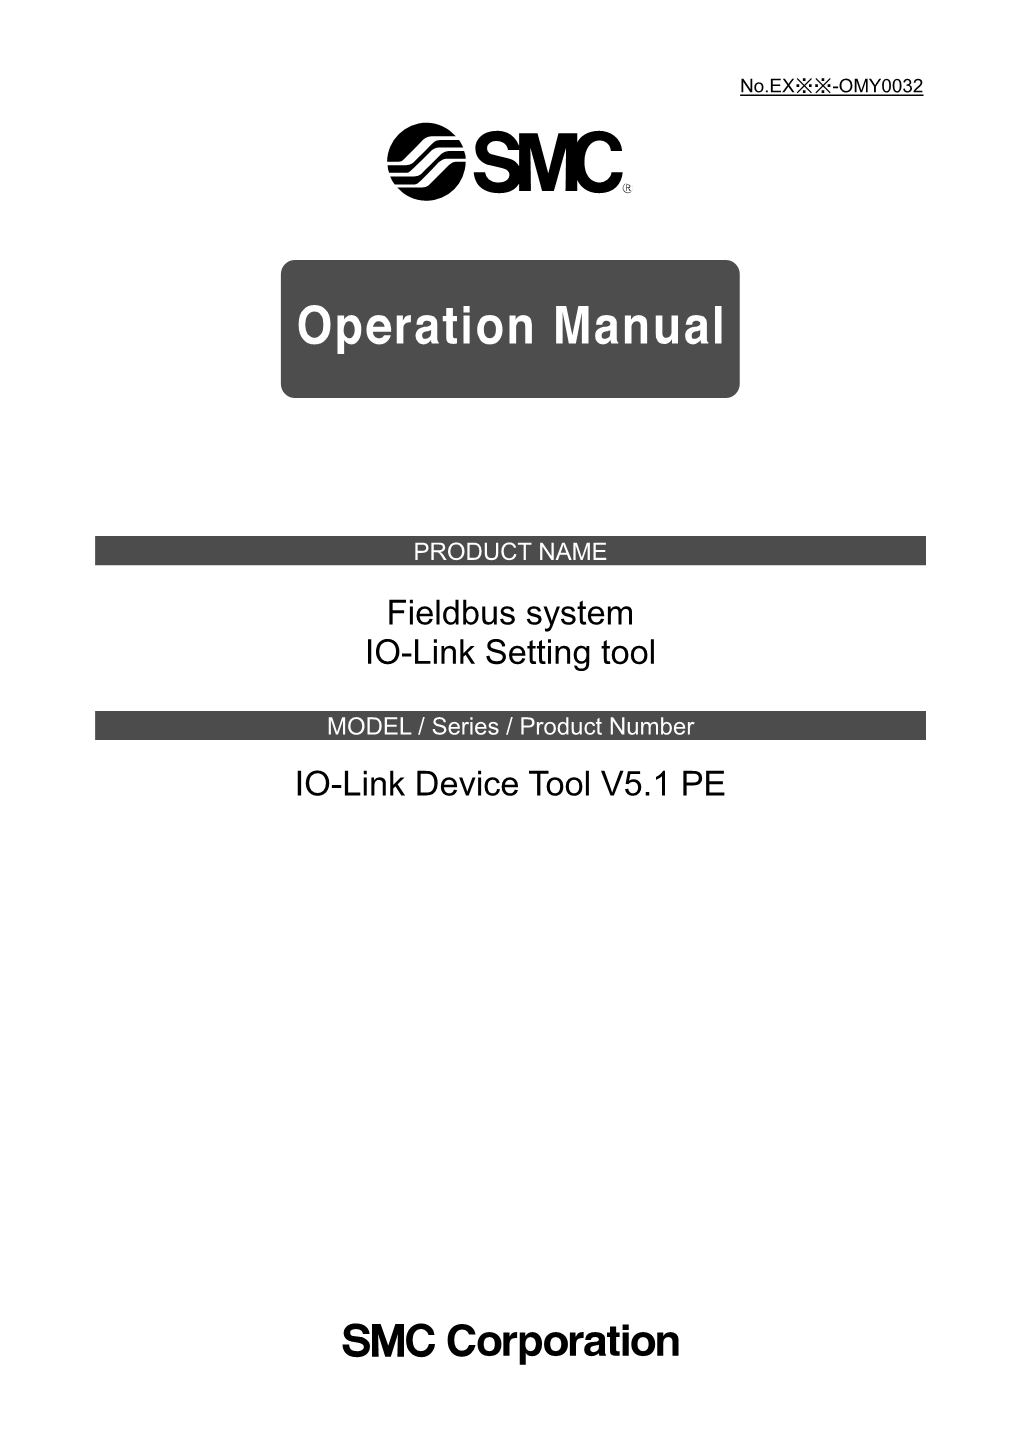 Fieldbus System IO-Link Setting Tool